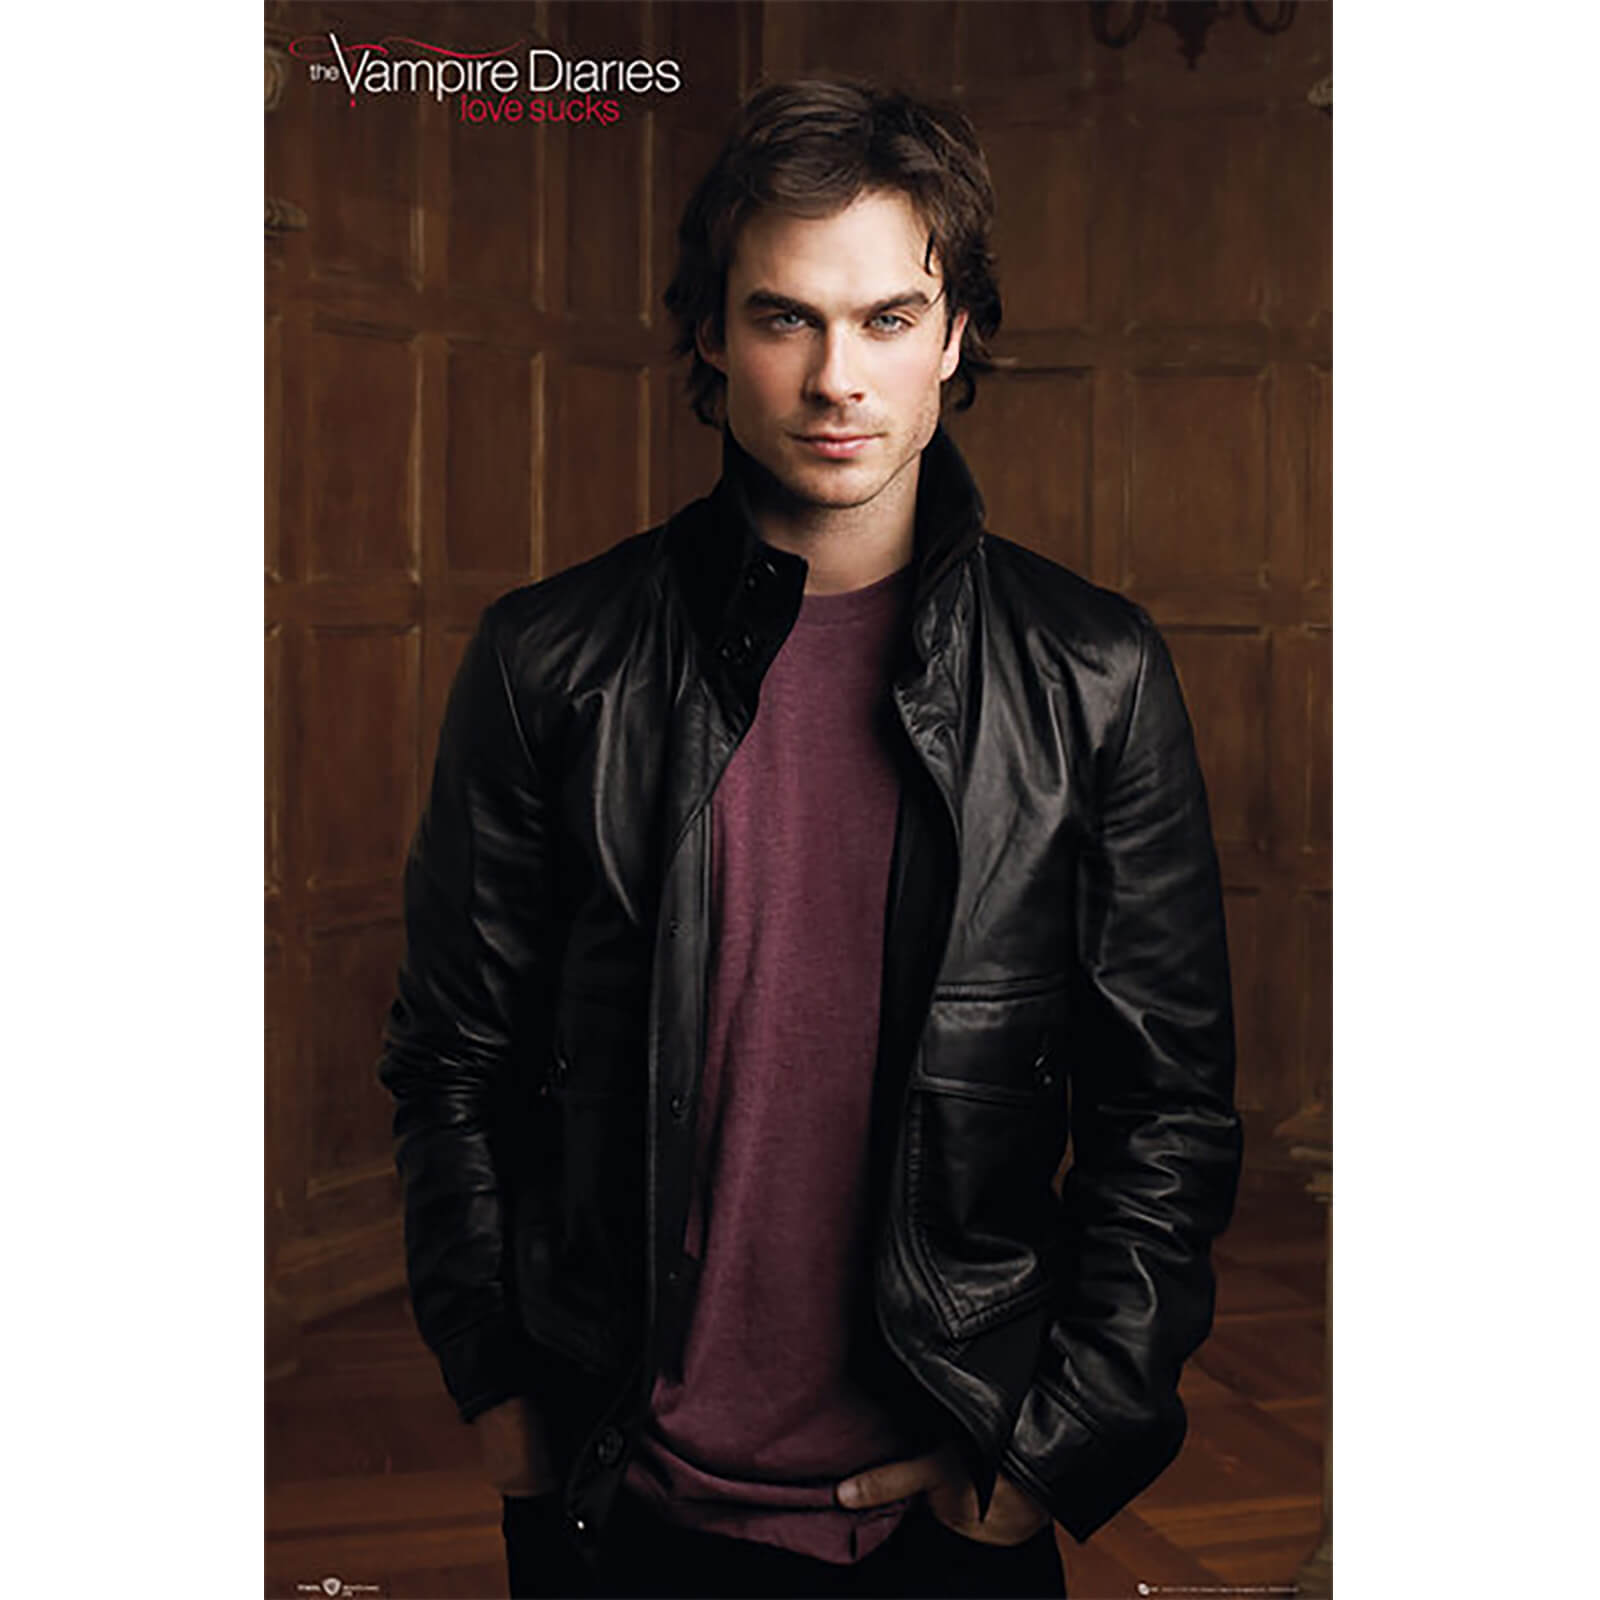 The Vampire Diaries Damon - Maxi Poster - 61 x 91.5cm ...